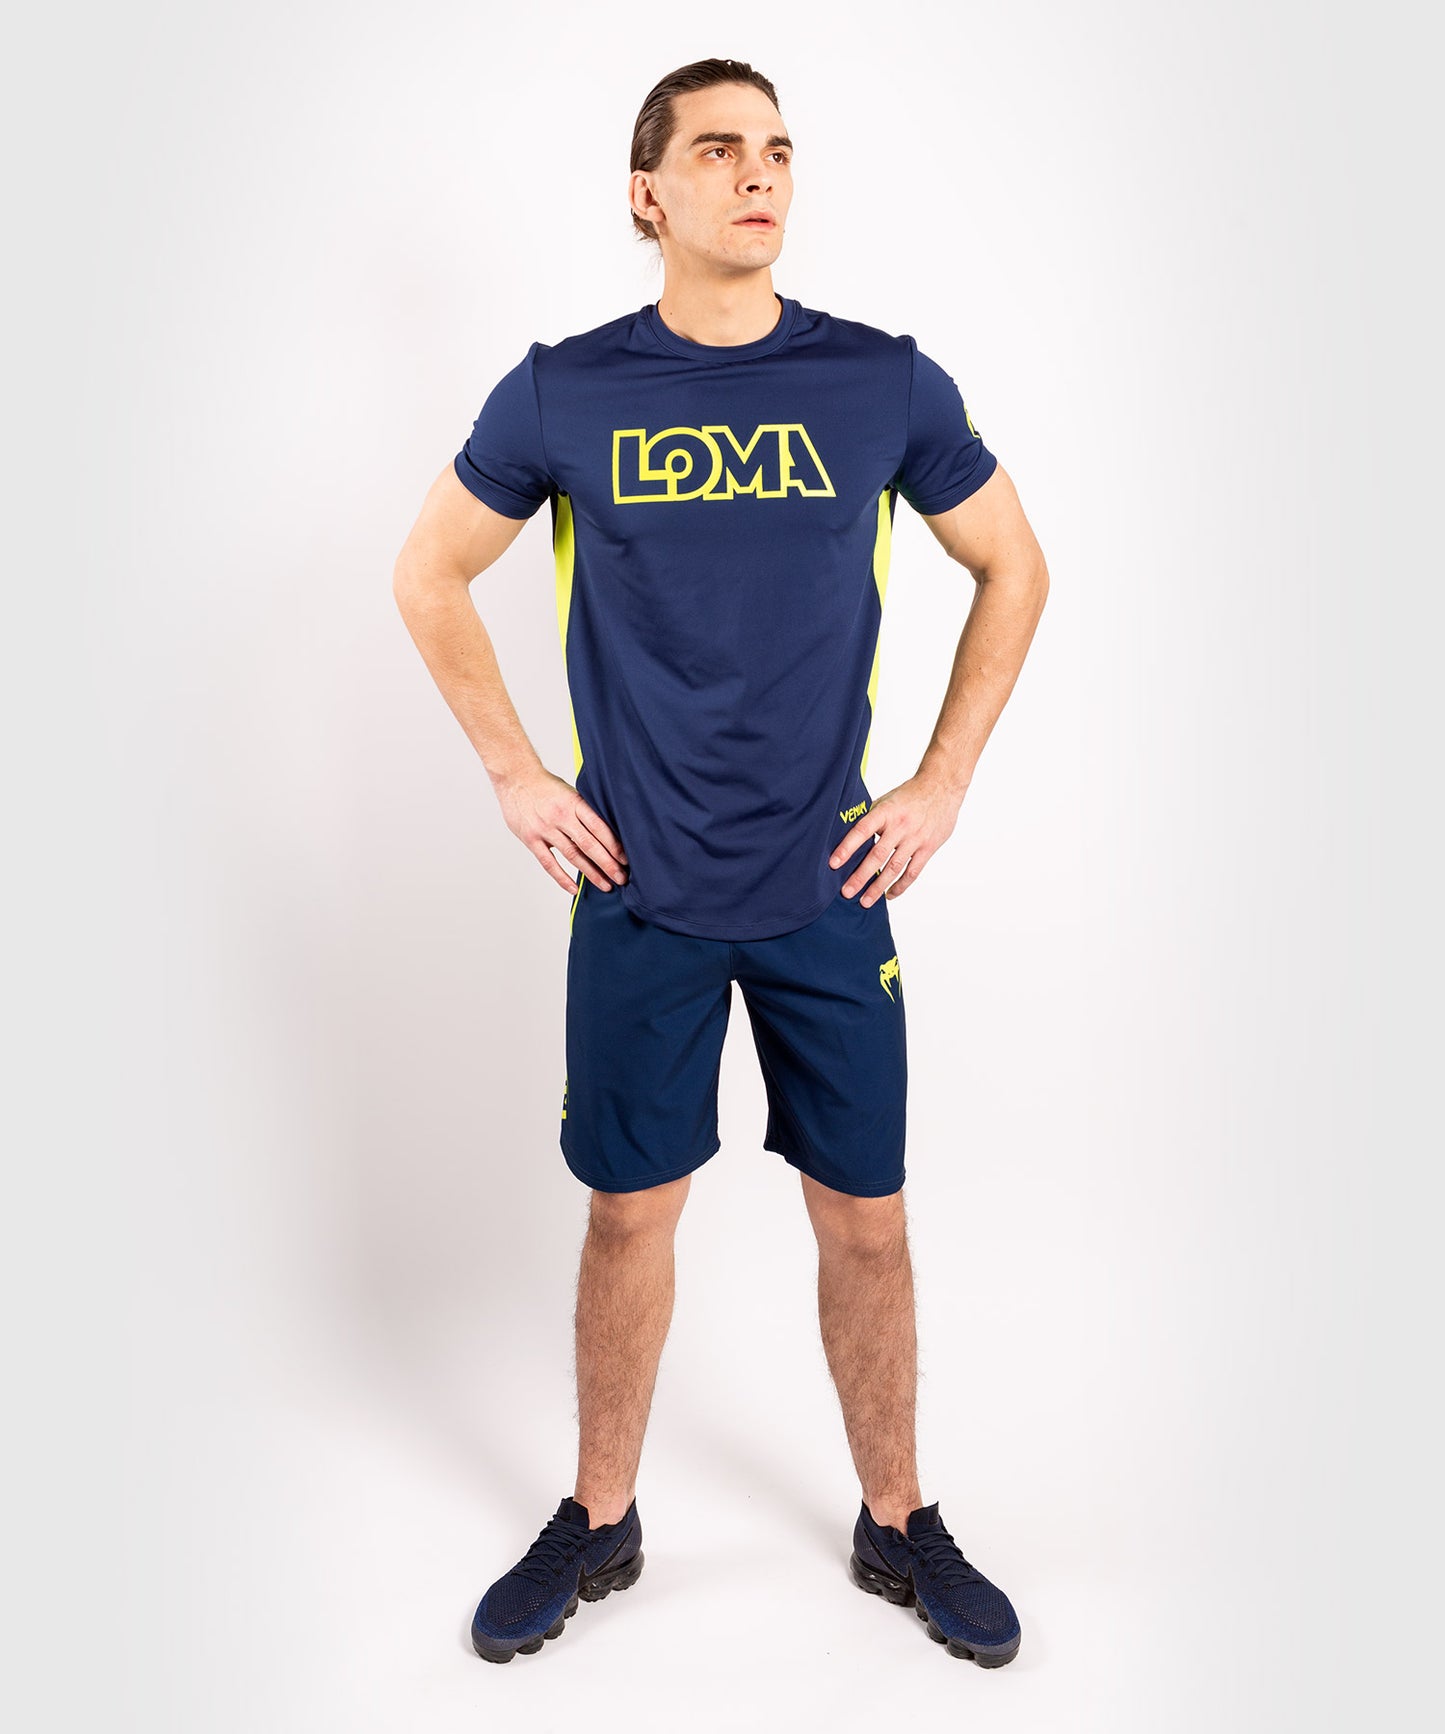 Venum Origins Dry Tech T-shirt - blauw/geel